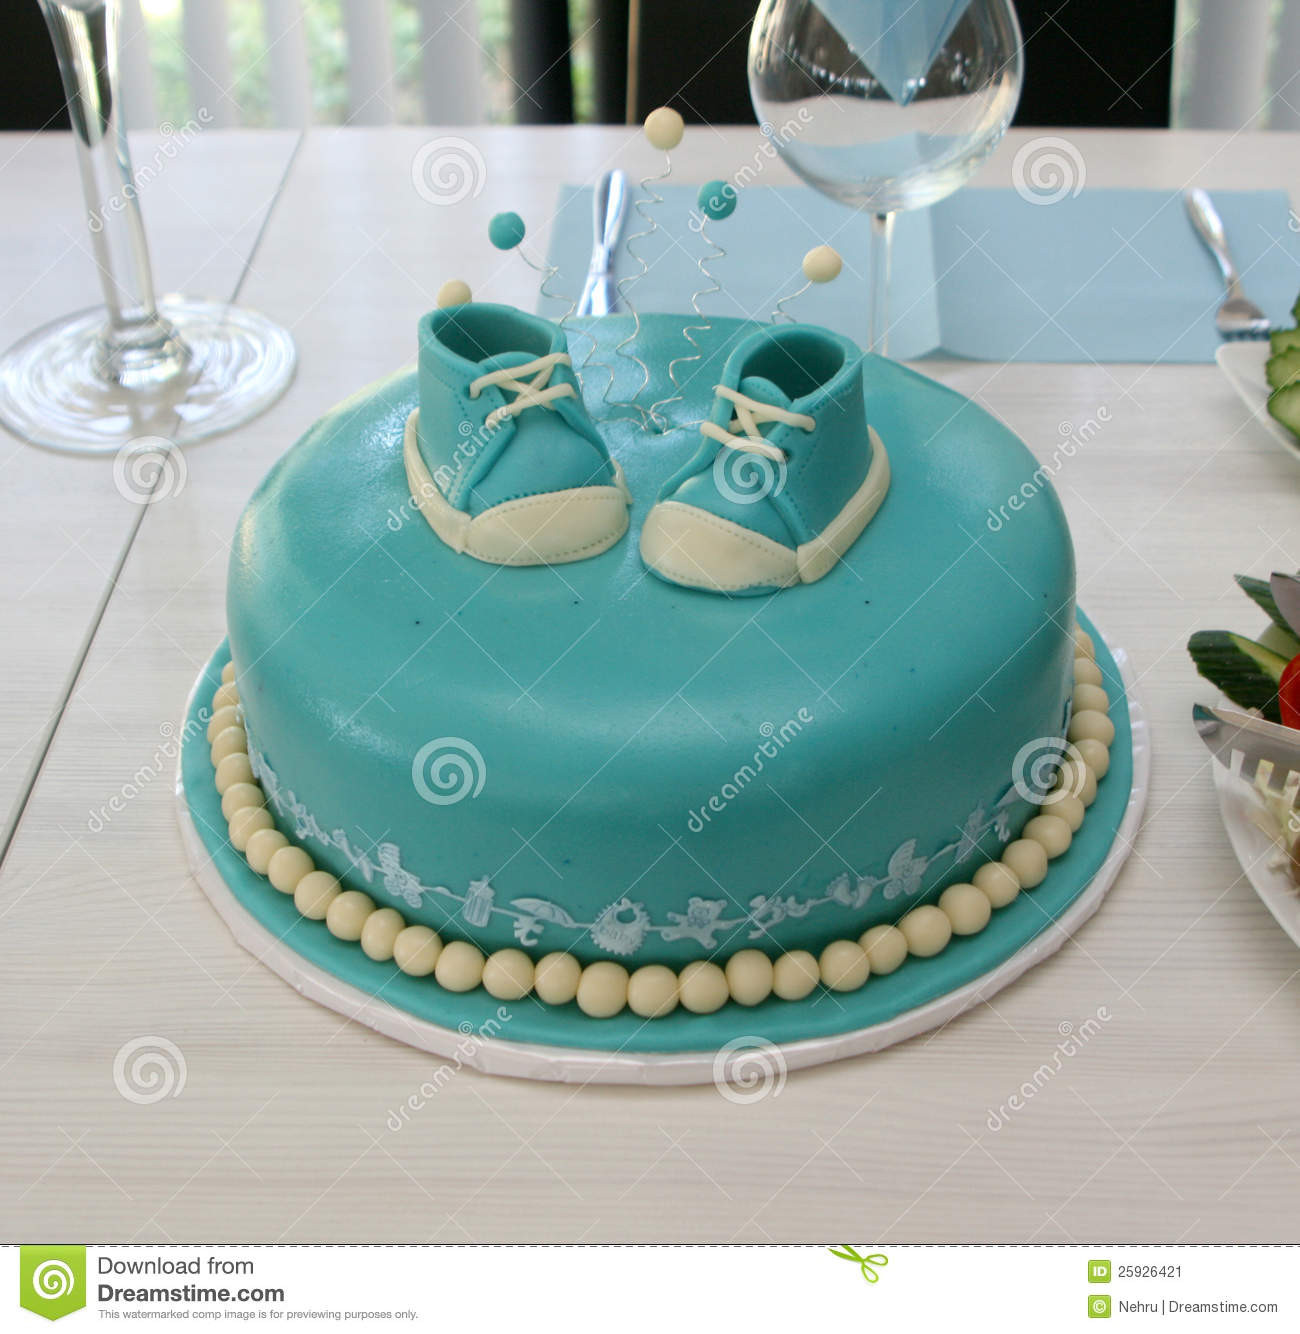 Baby Boy Birthday Cakes
 Baby boy birthday cake stock image Image of celebration